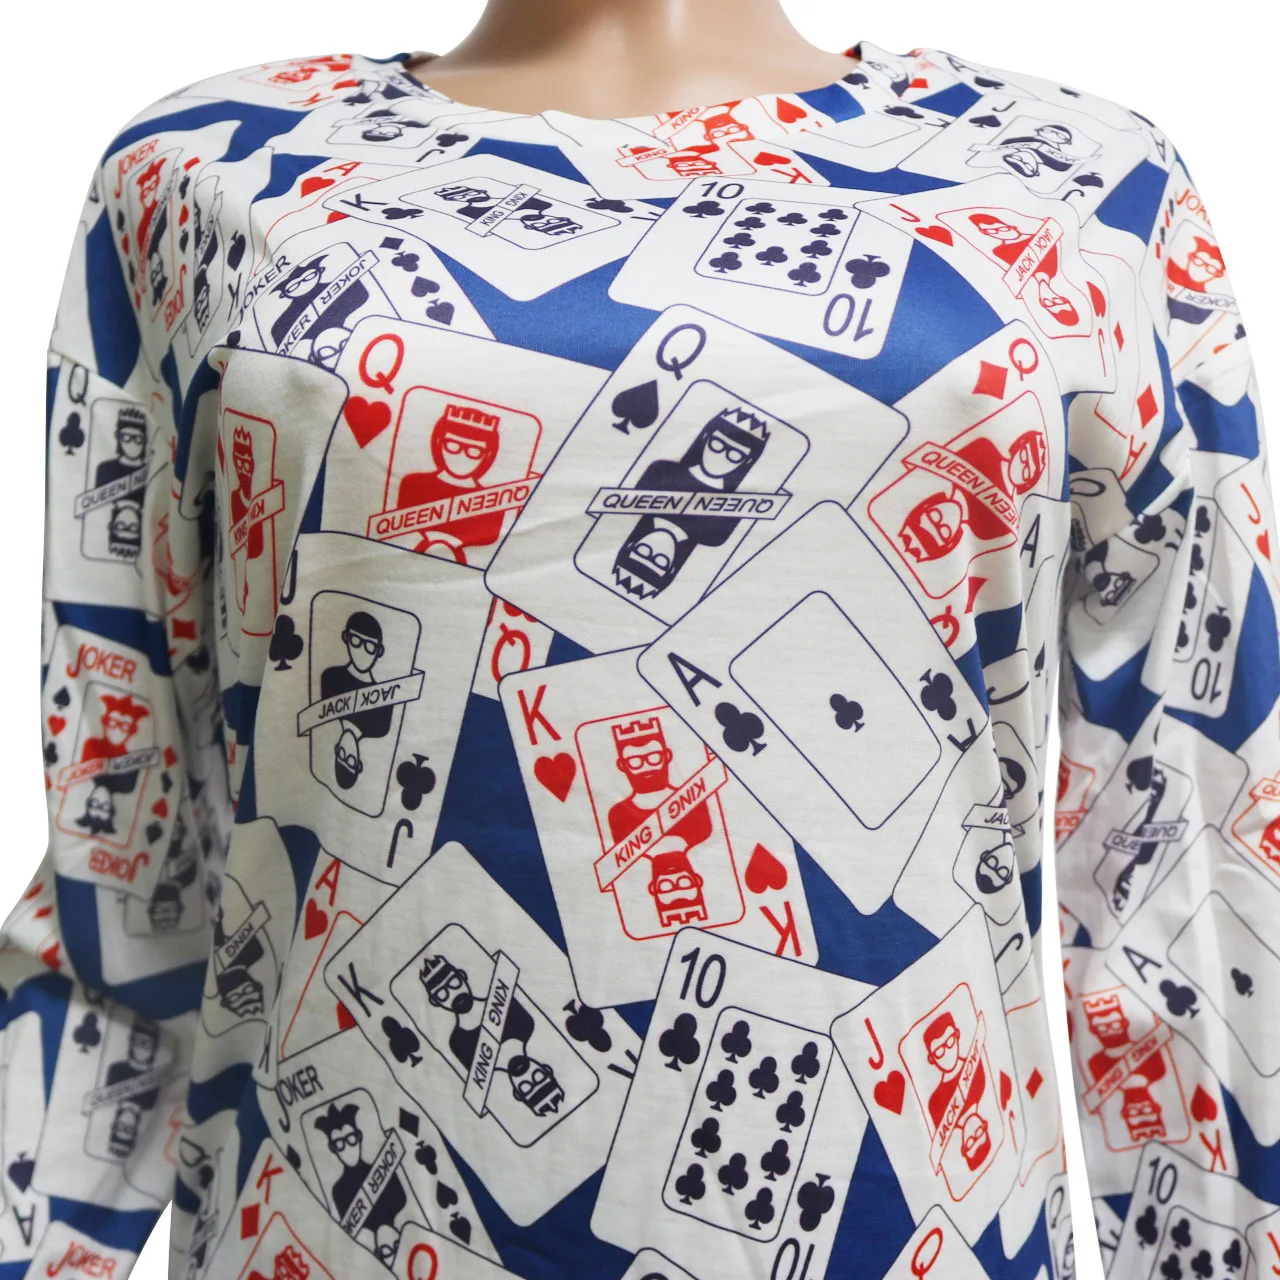 Plus Size Lingerie Girls Poker Suit Pyjamas Women's Sleepwear Pajamas ...